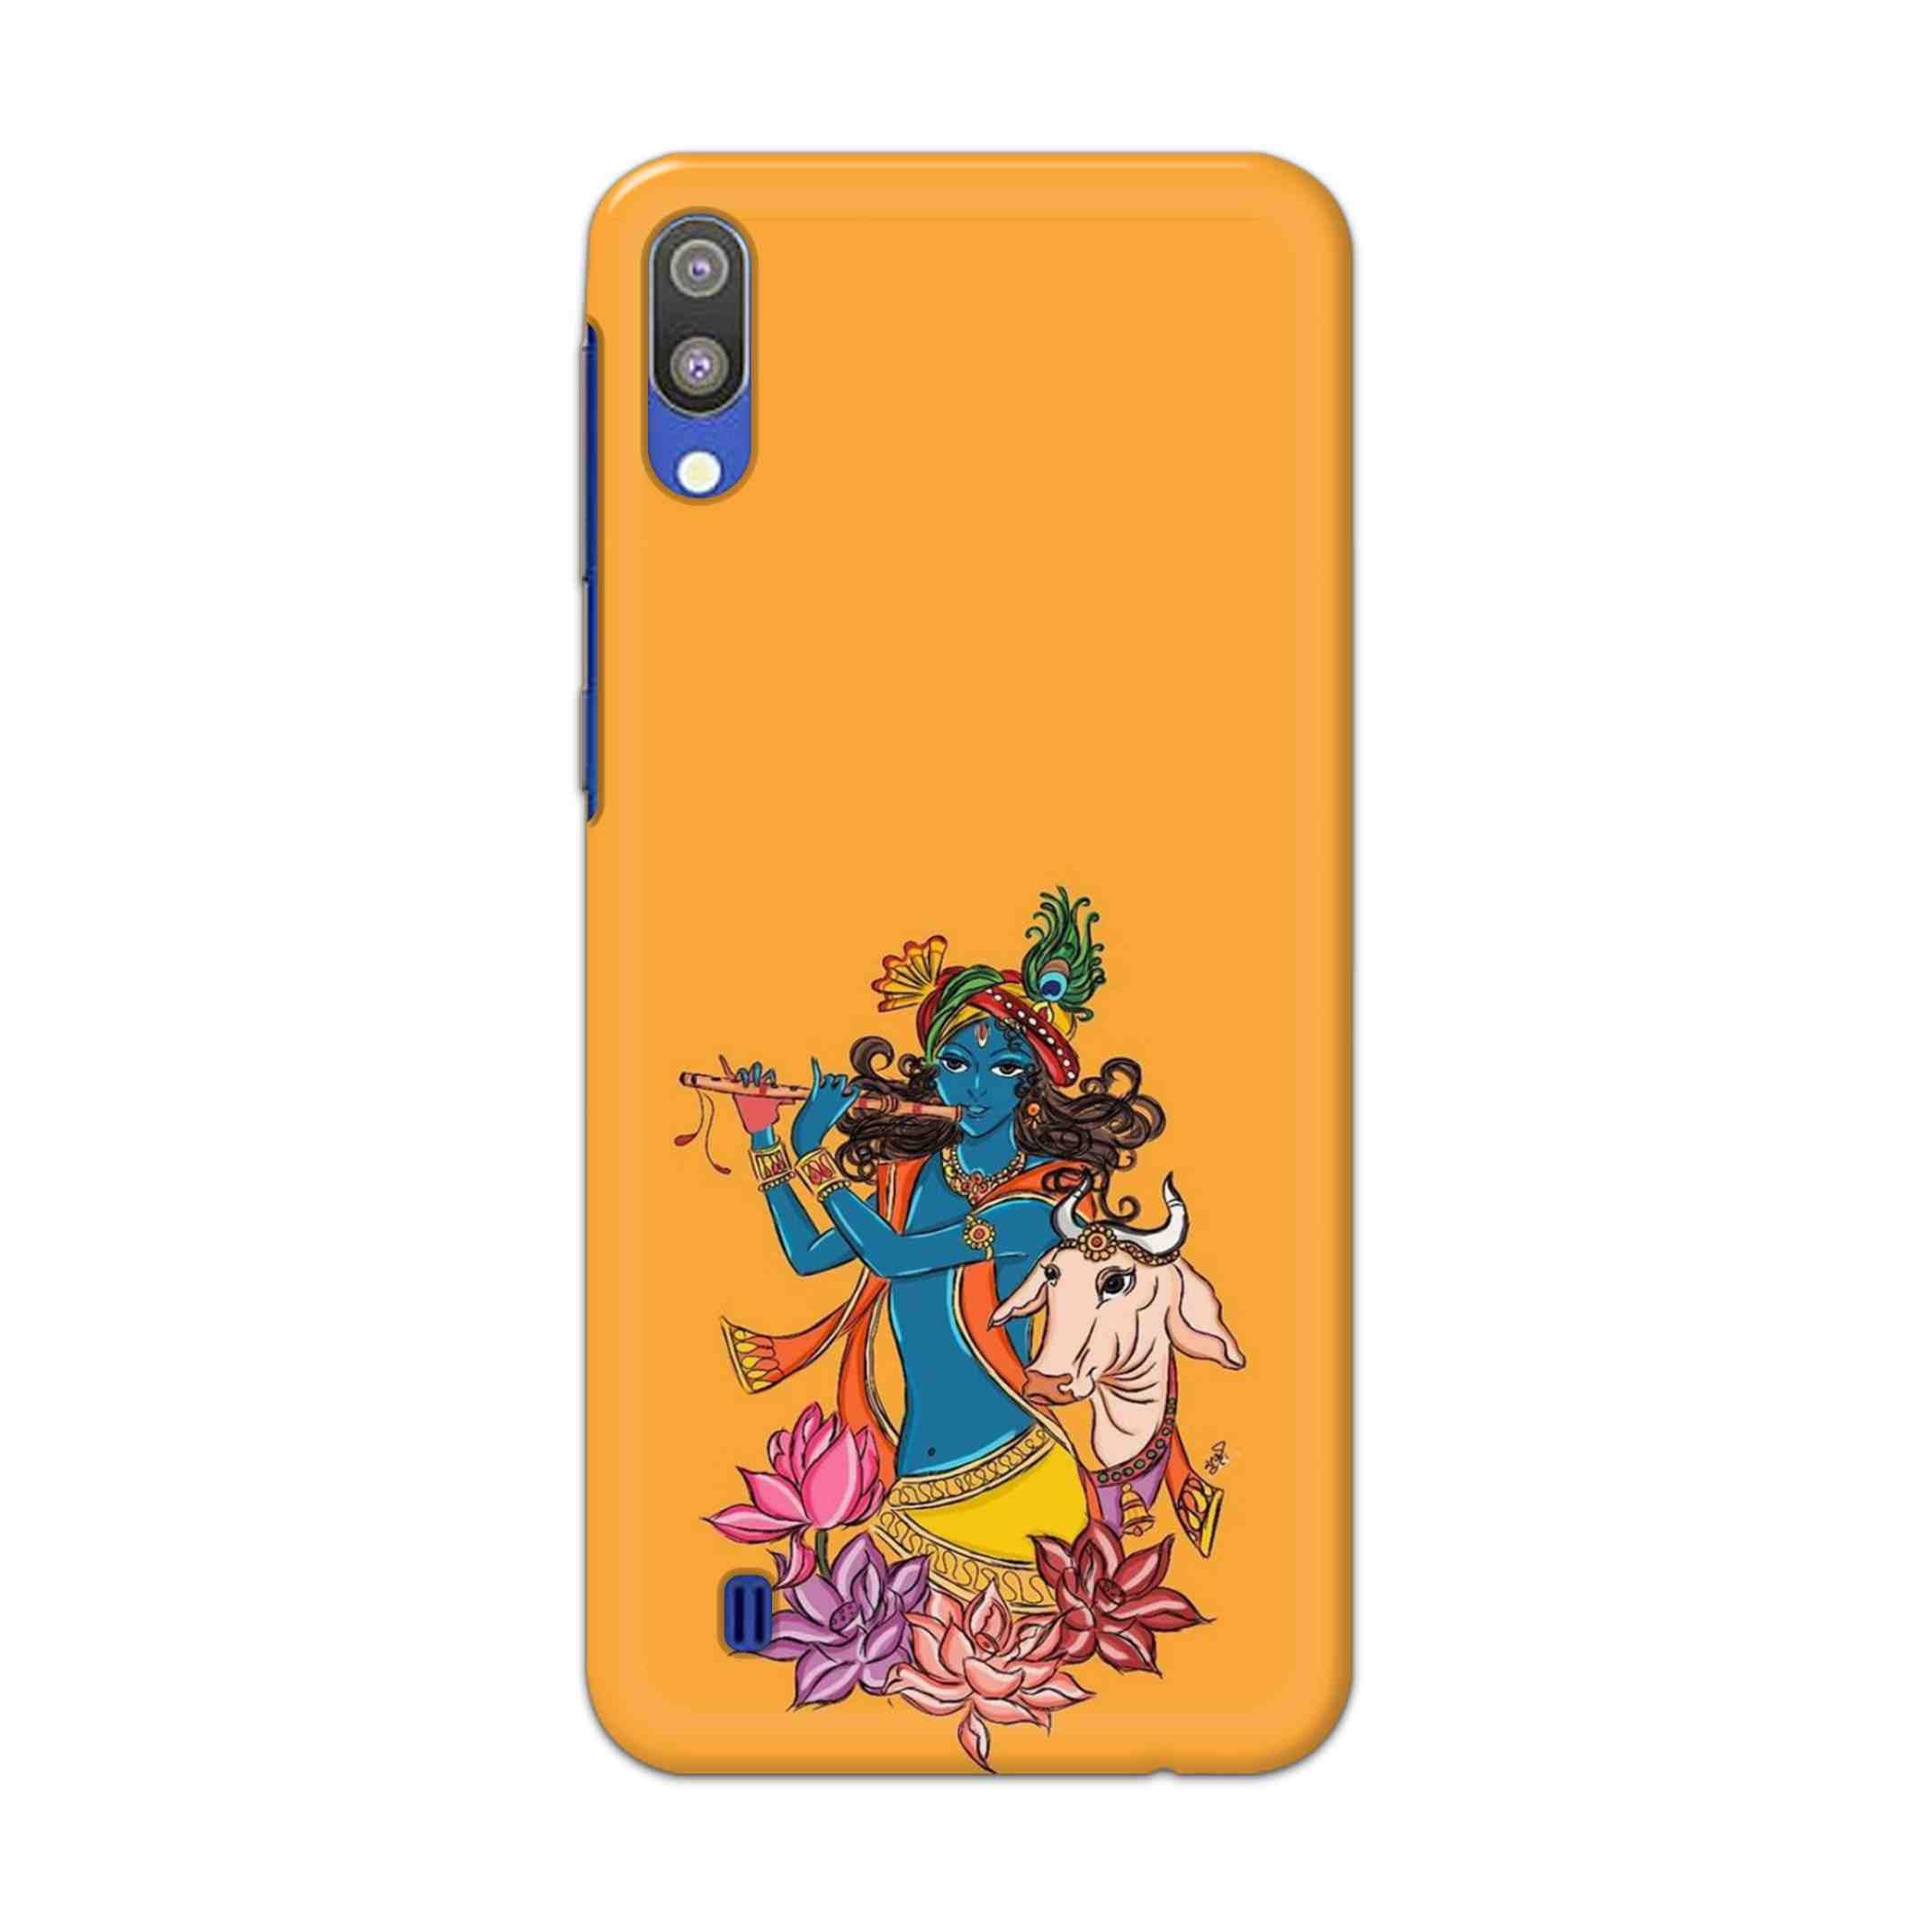 Buy Radhe Krishna Hard Back Mobile Phone Case Cover For Samsung Galaxy M10 Online